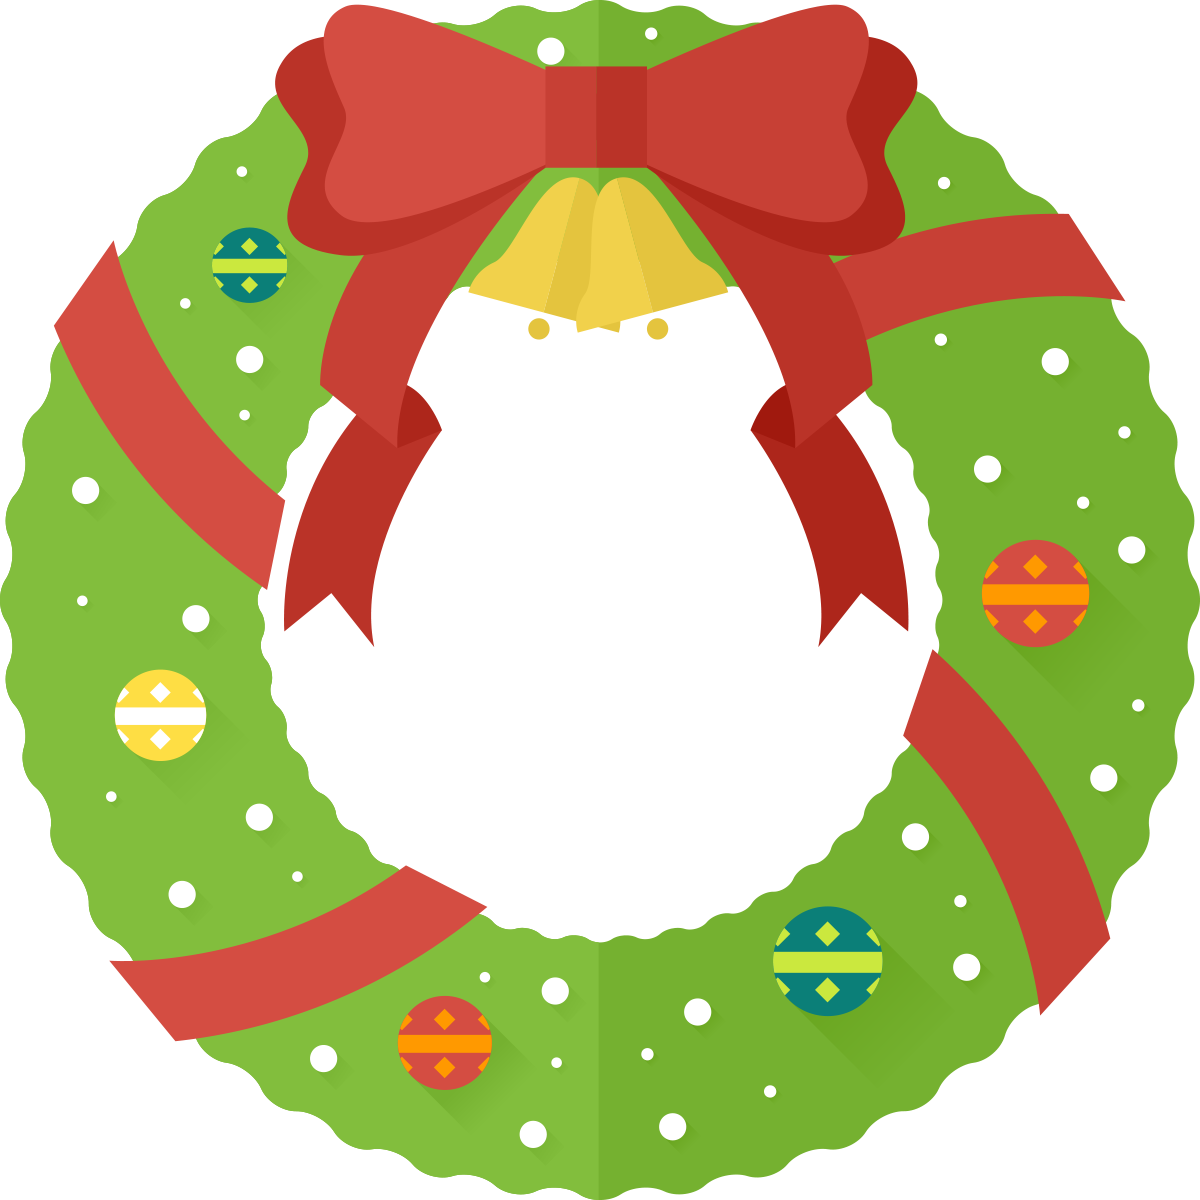 Clipart of christmas wreath